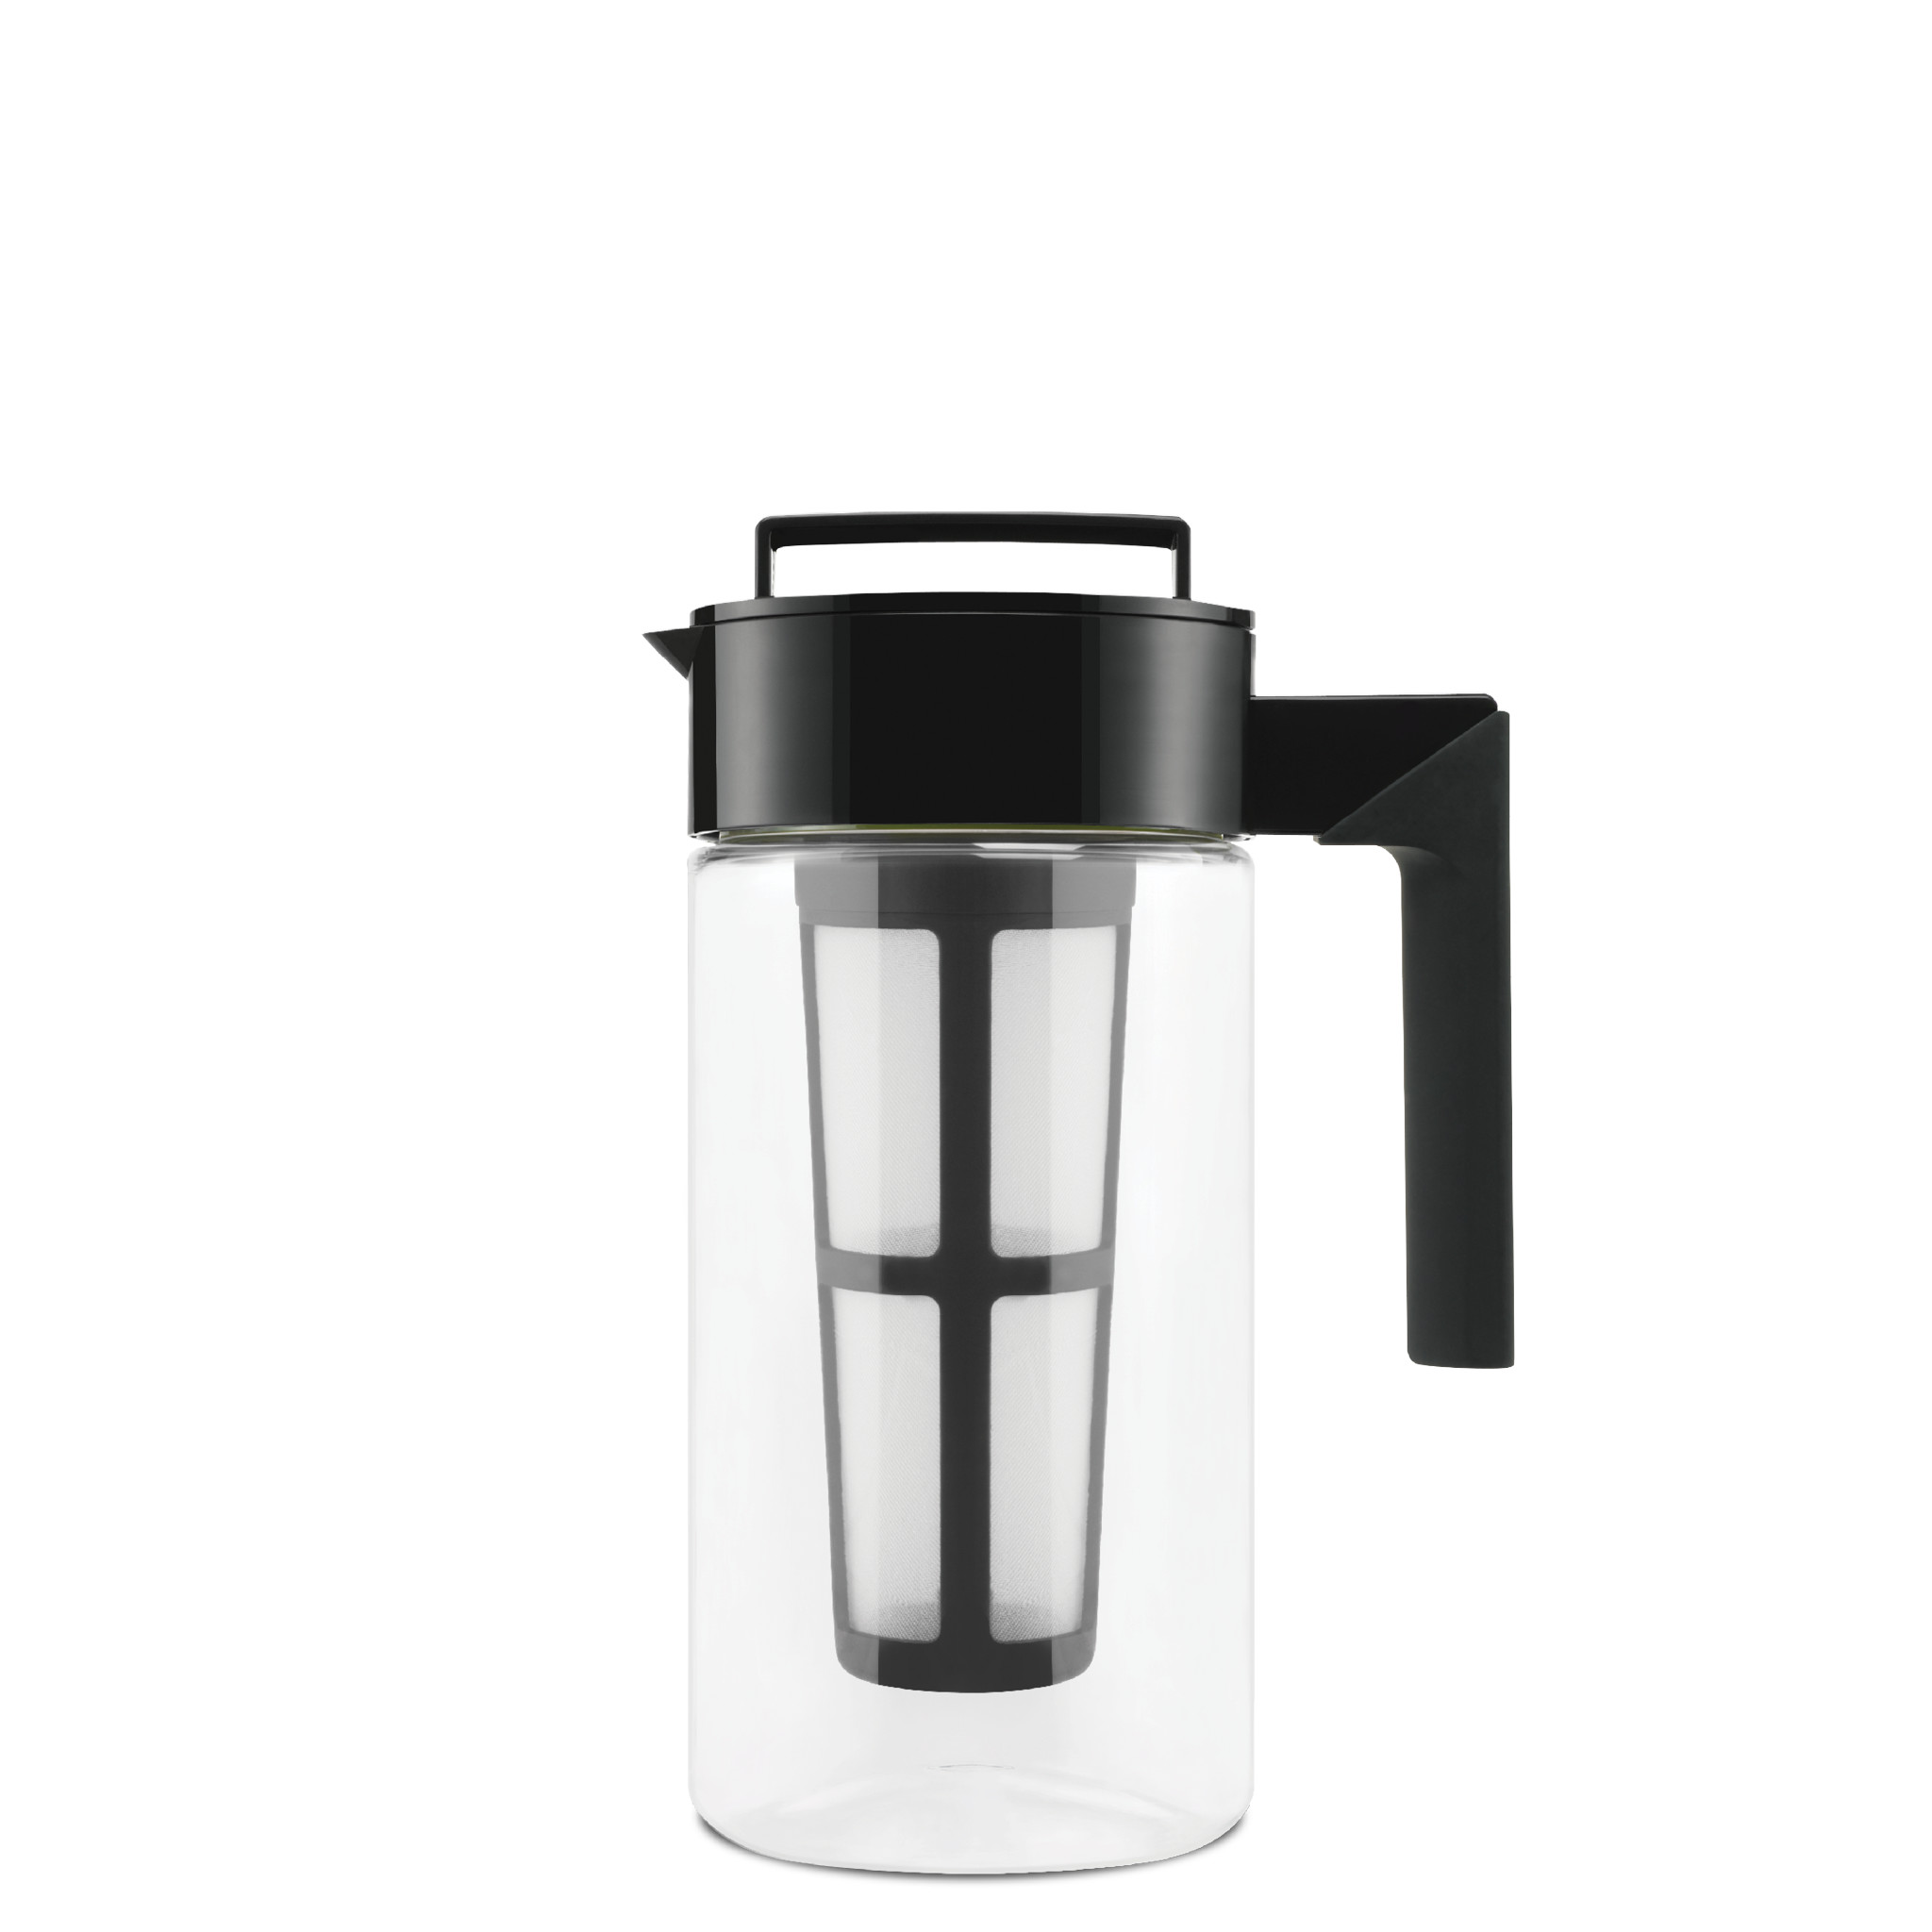 Takeya Cold Brew Tritan Plastic Coffee Maker Pitcher with Airtight Lid, 1 Quart, Black - image 2 of 7